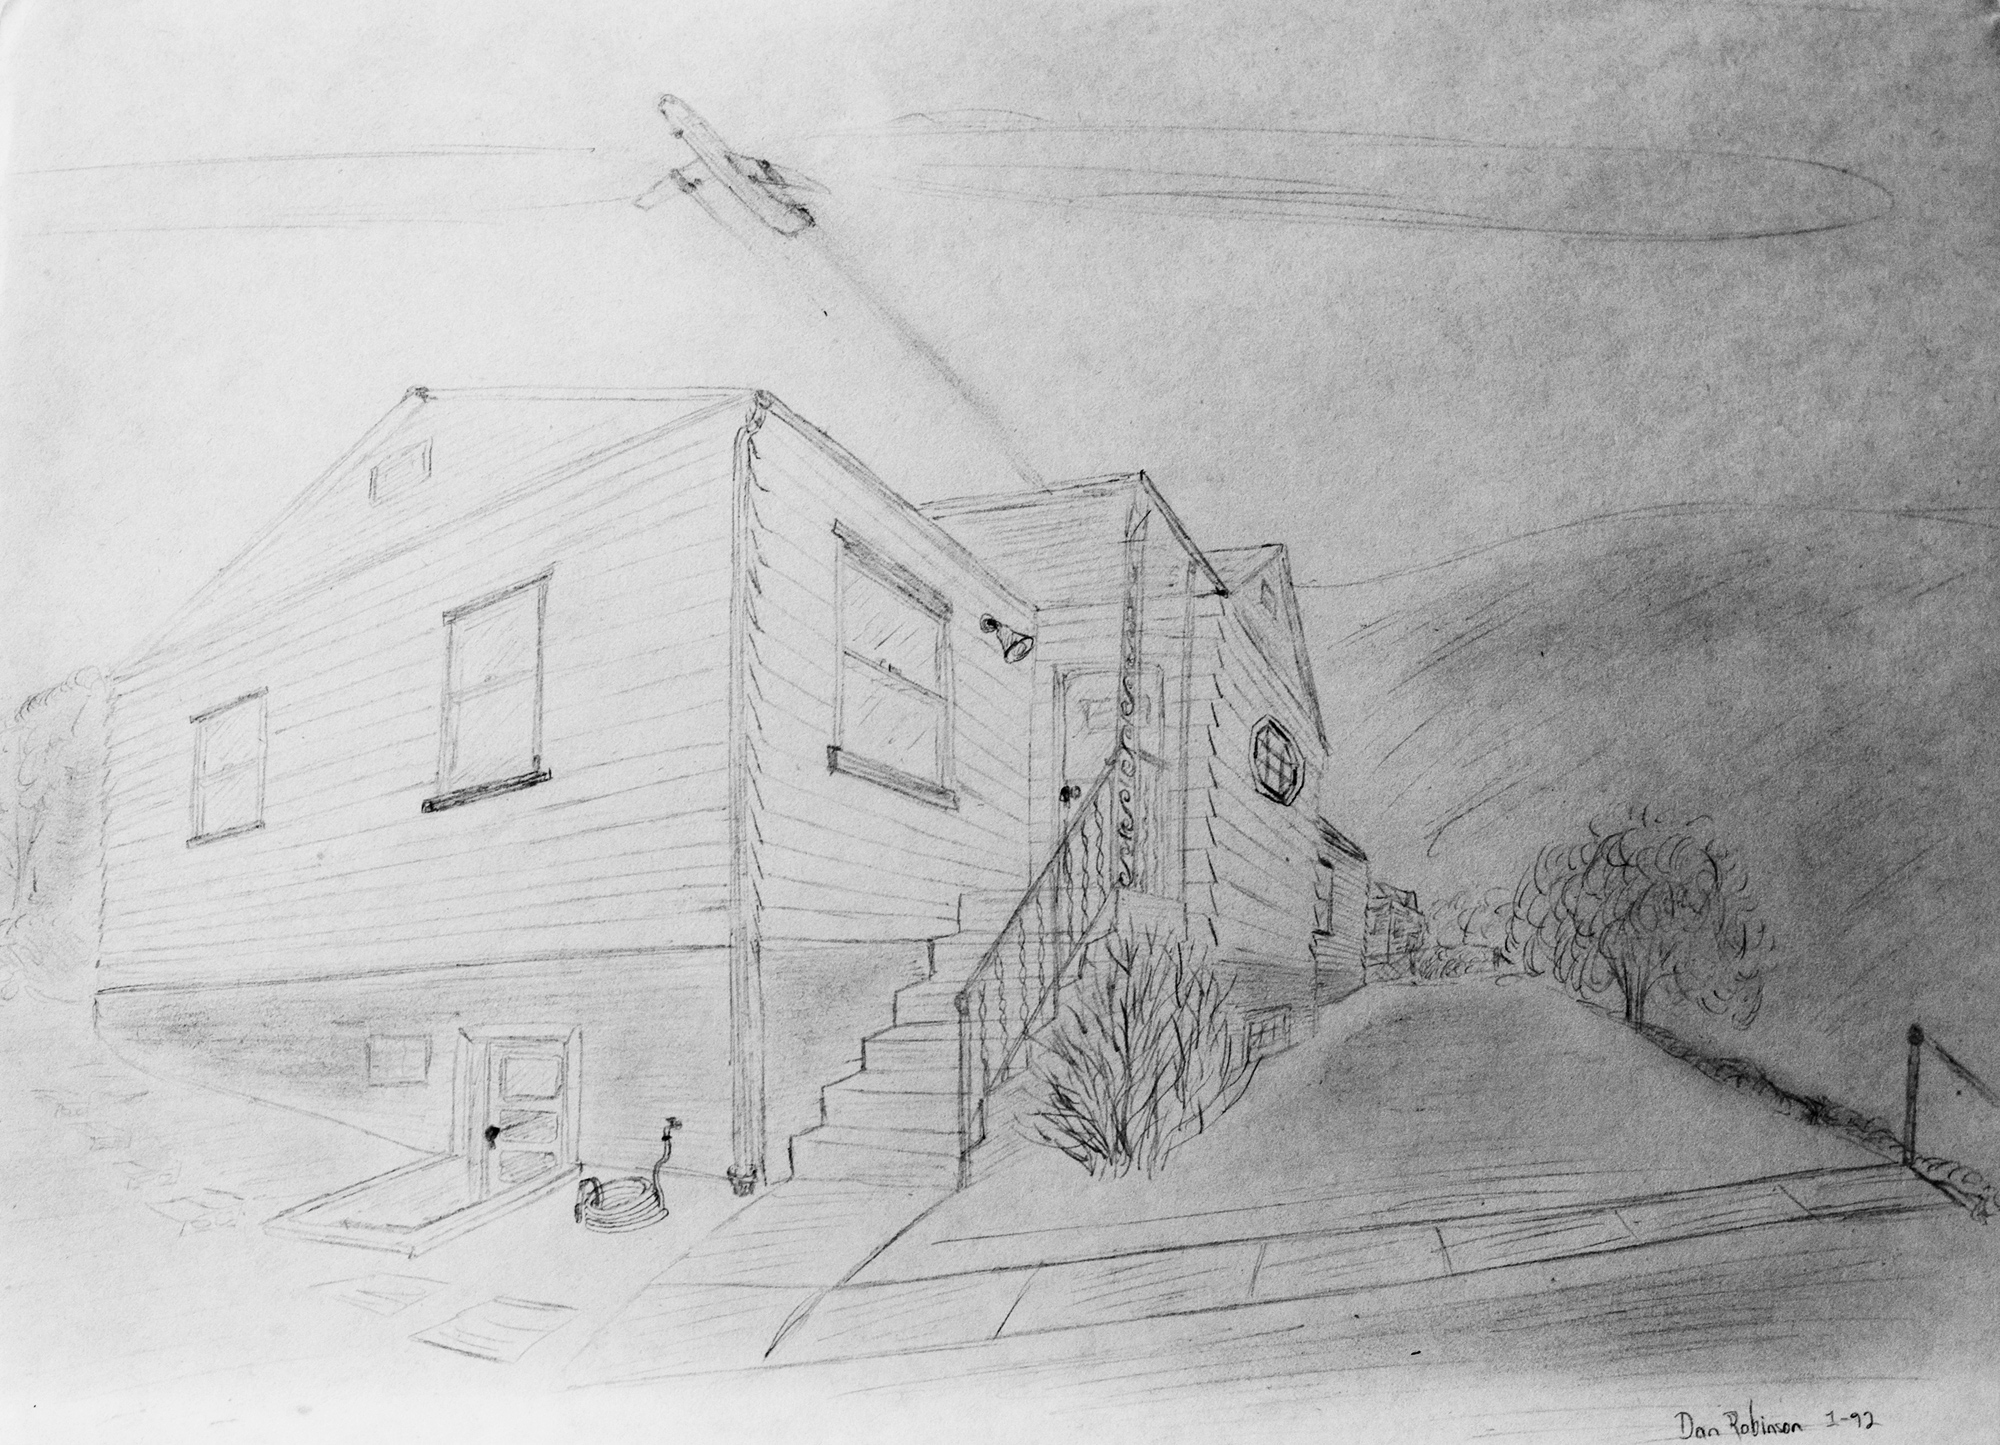 831 Scenic Drive, Charleston, WV pencil sketch